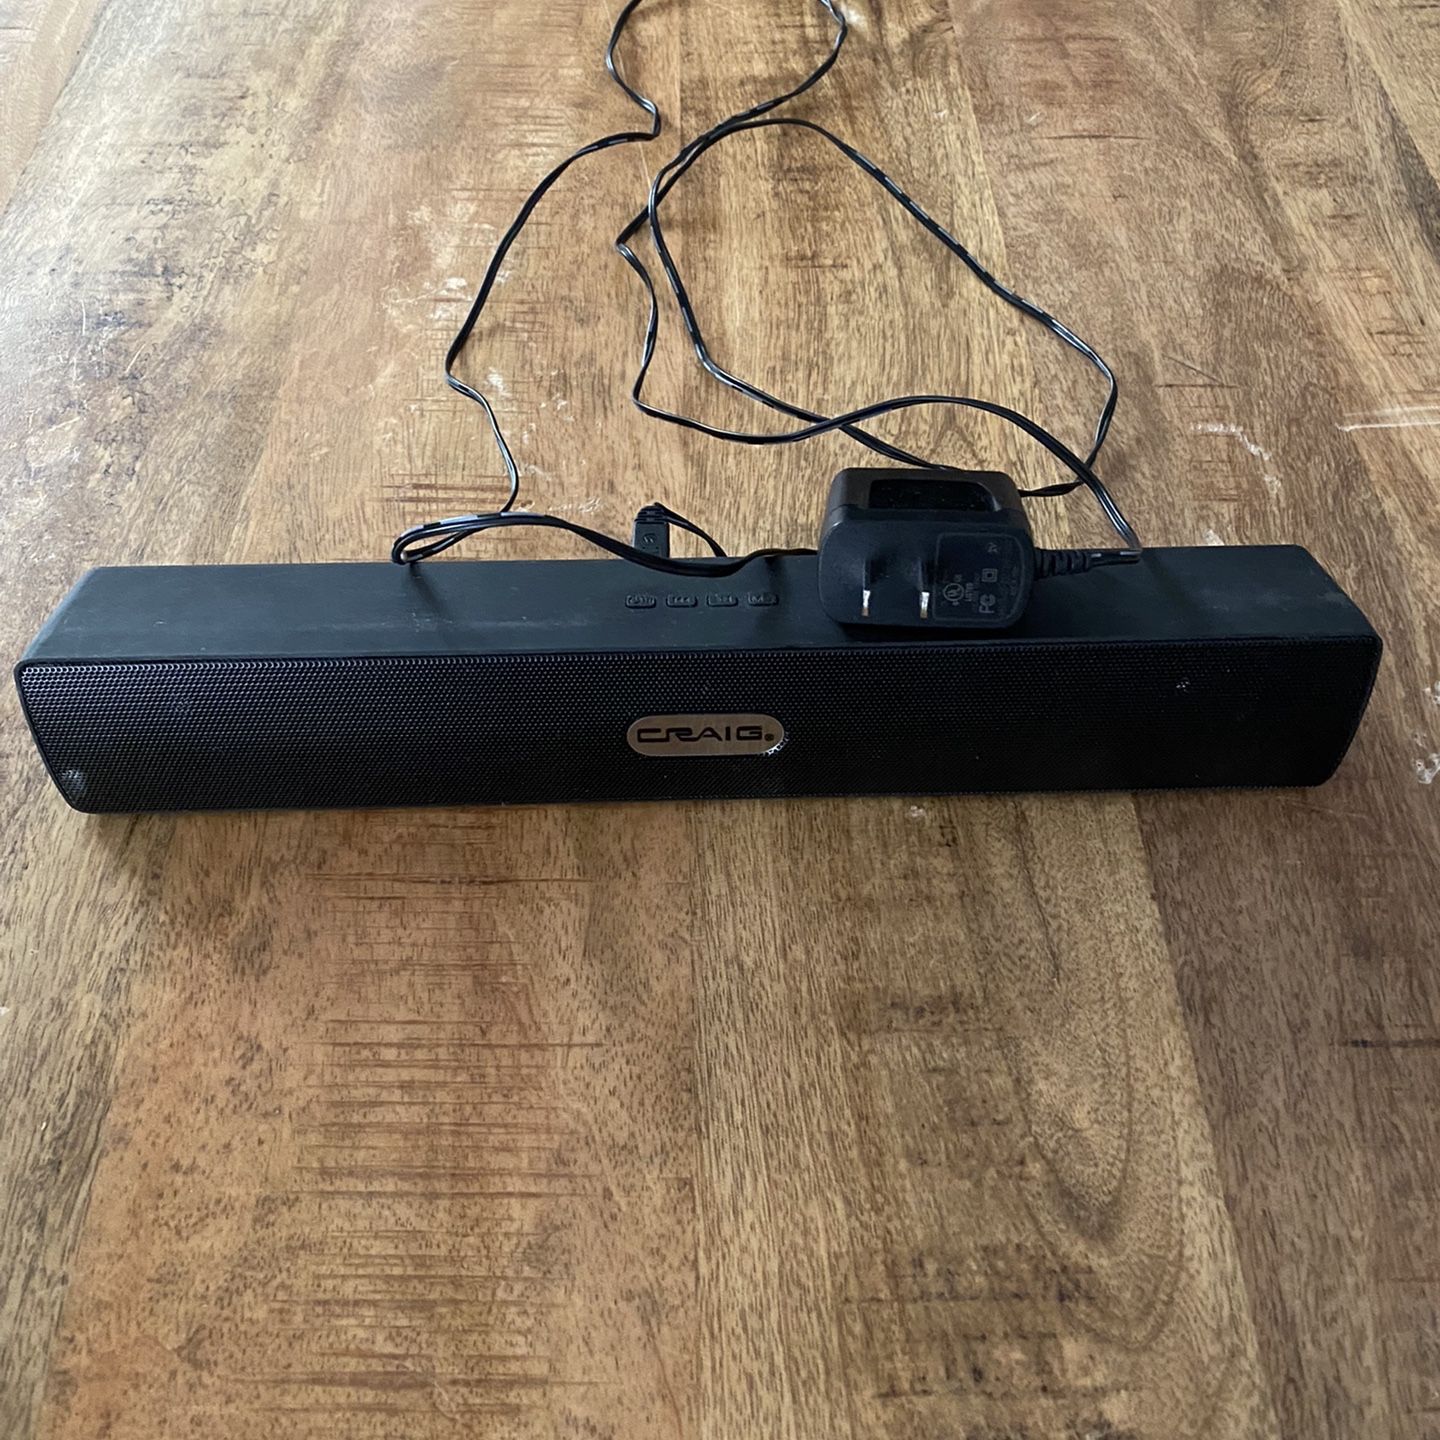 Craig CMA3581 Portable Speaker Bluetooth Wireless  Black